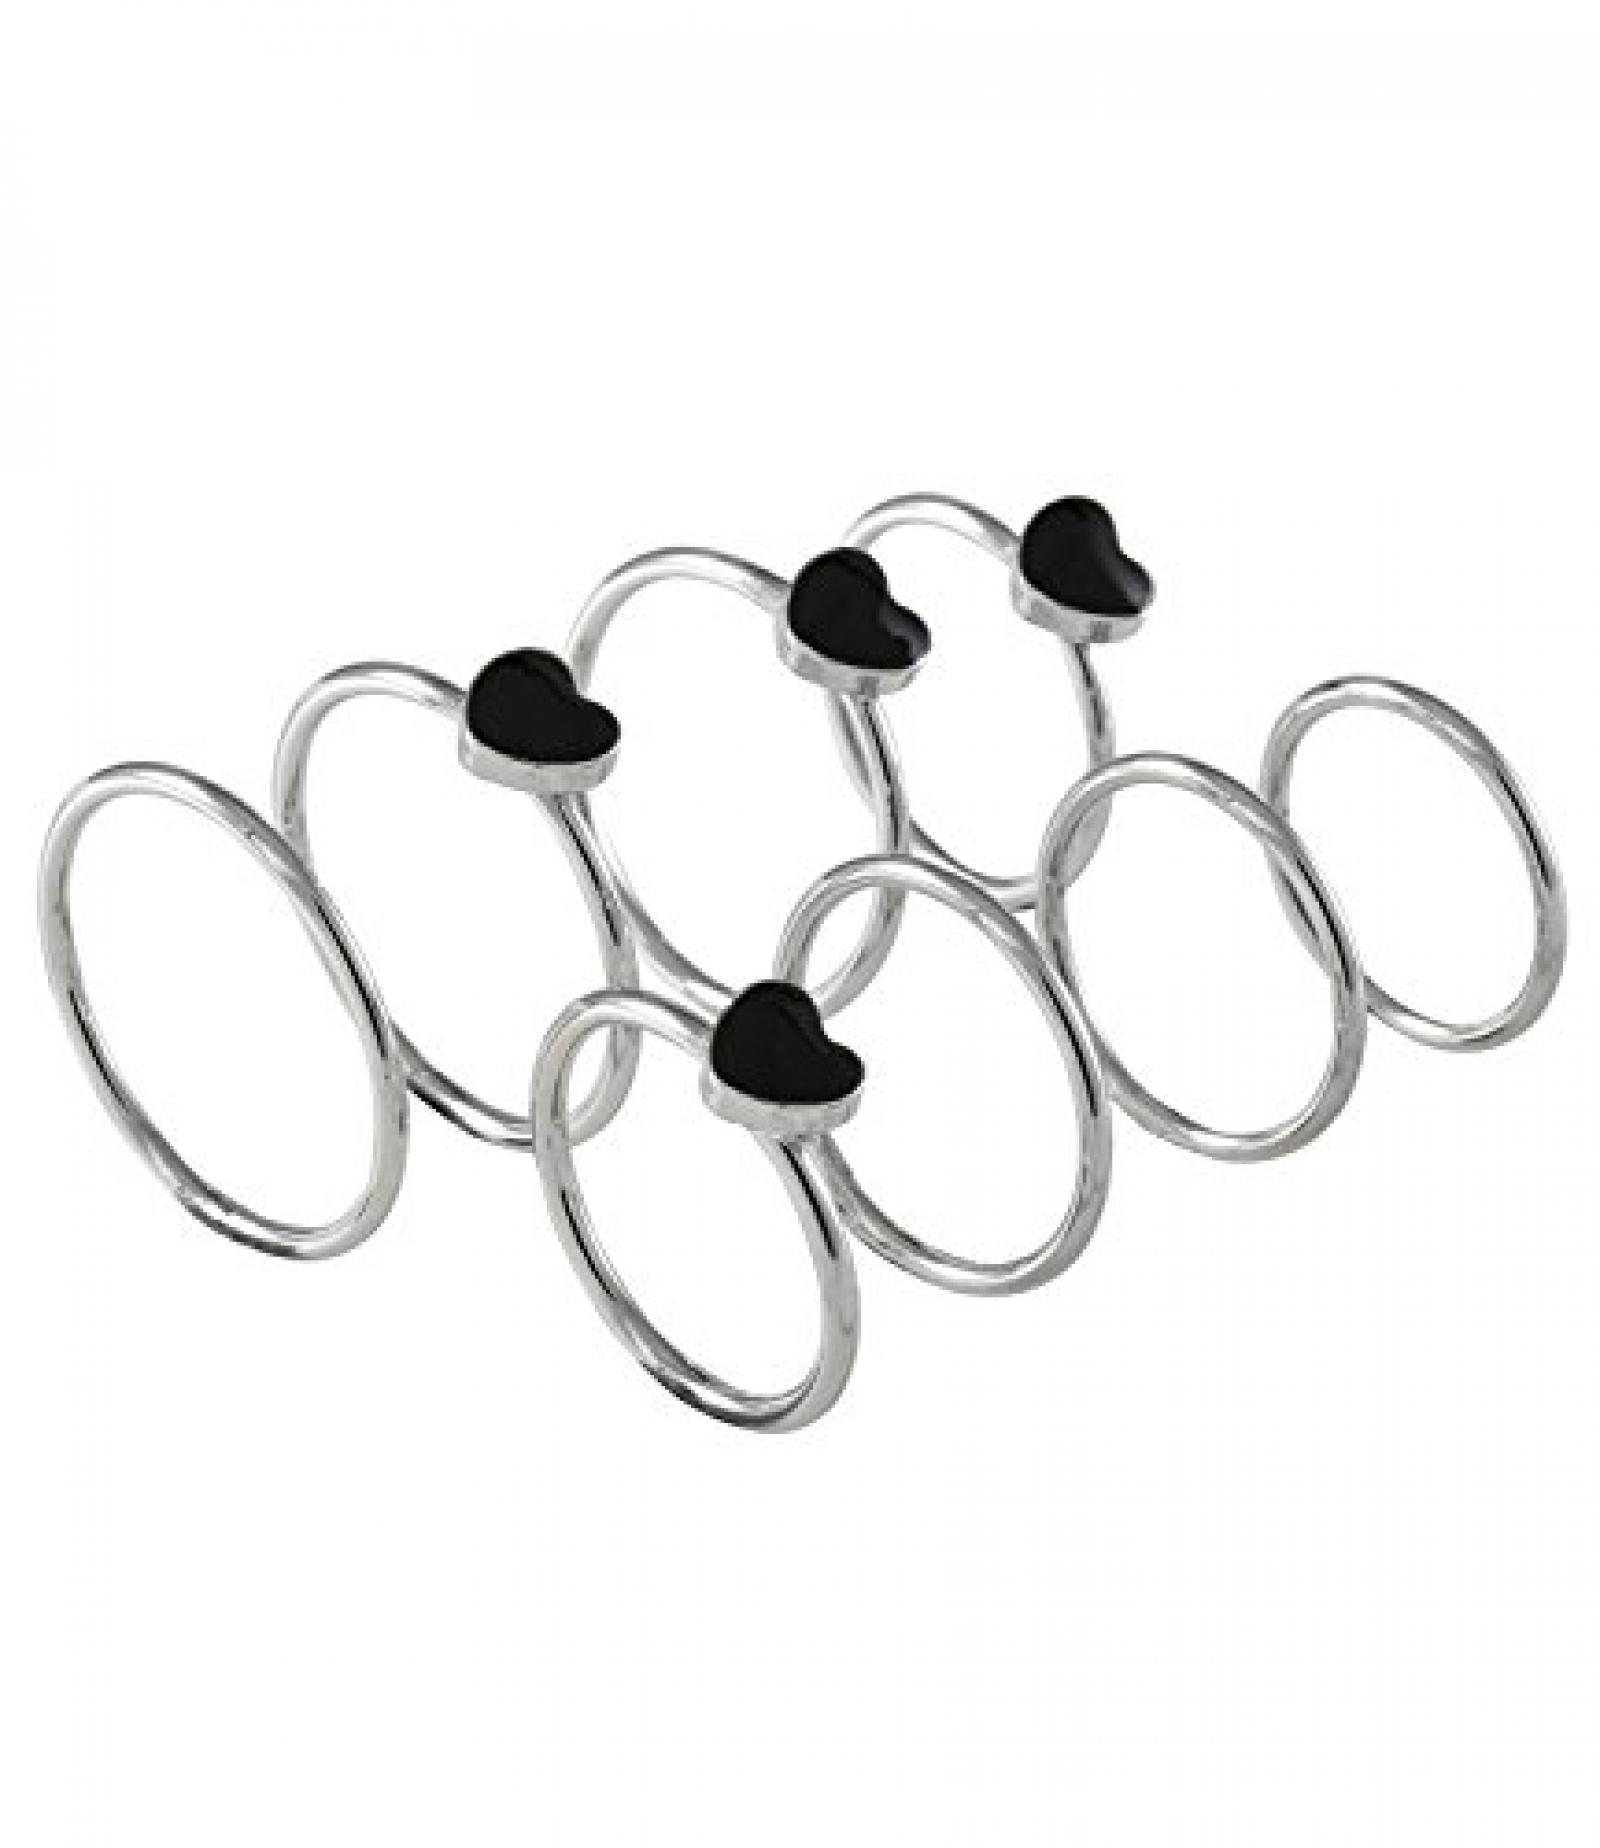 SIX "Cecilia" 8er Set silberne Ringe, Minirings mit schwarzem Herz (383-351) 